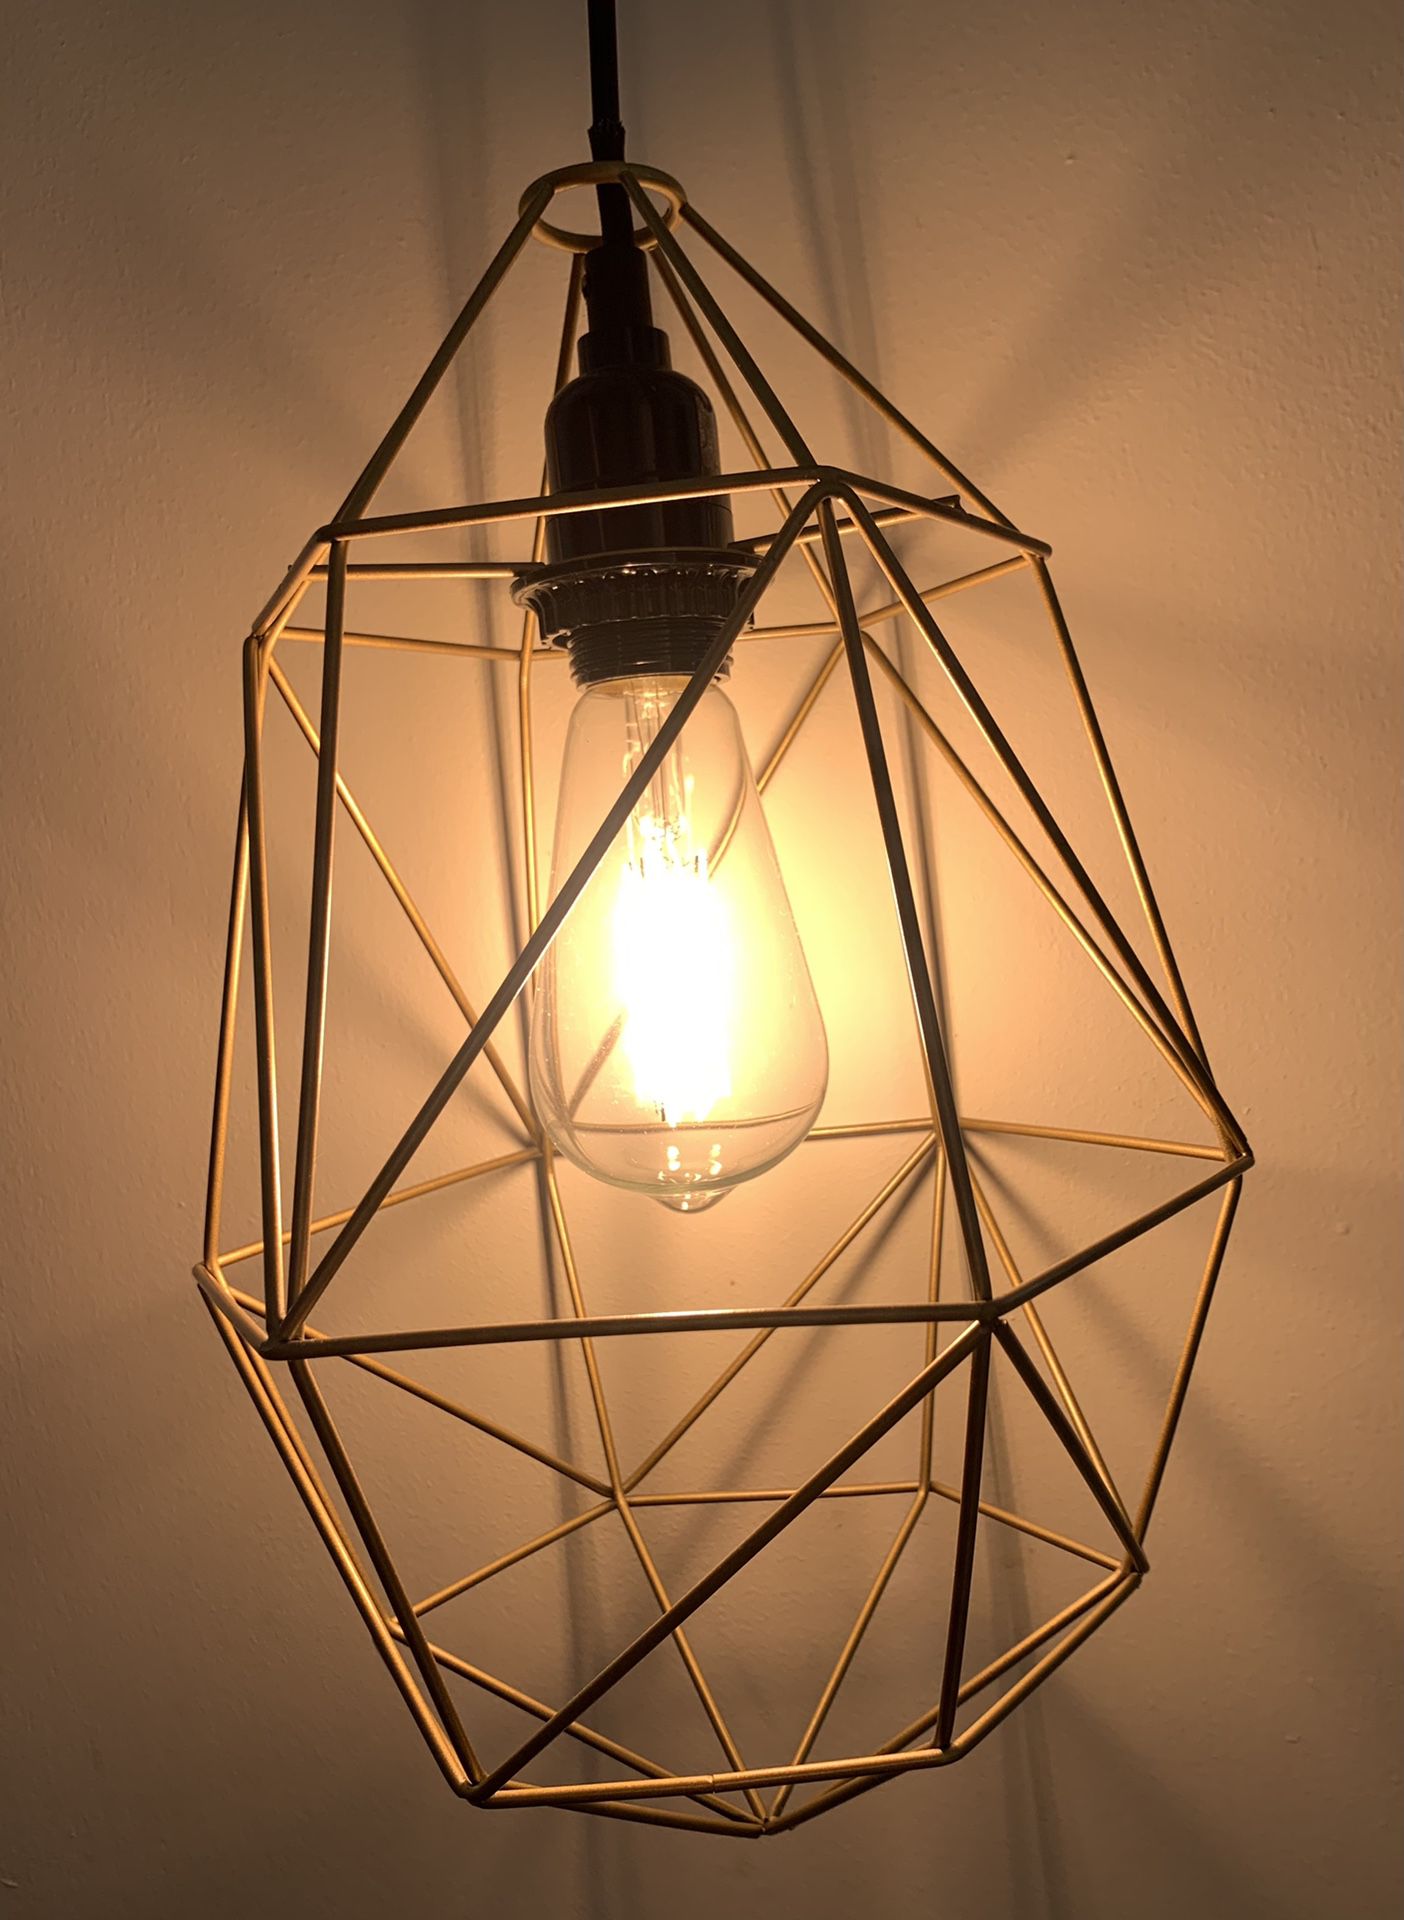 Hanging lamp, modern lamp, retro lamp with bulb